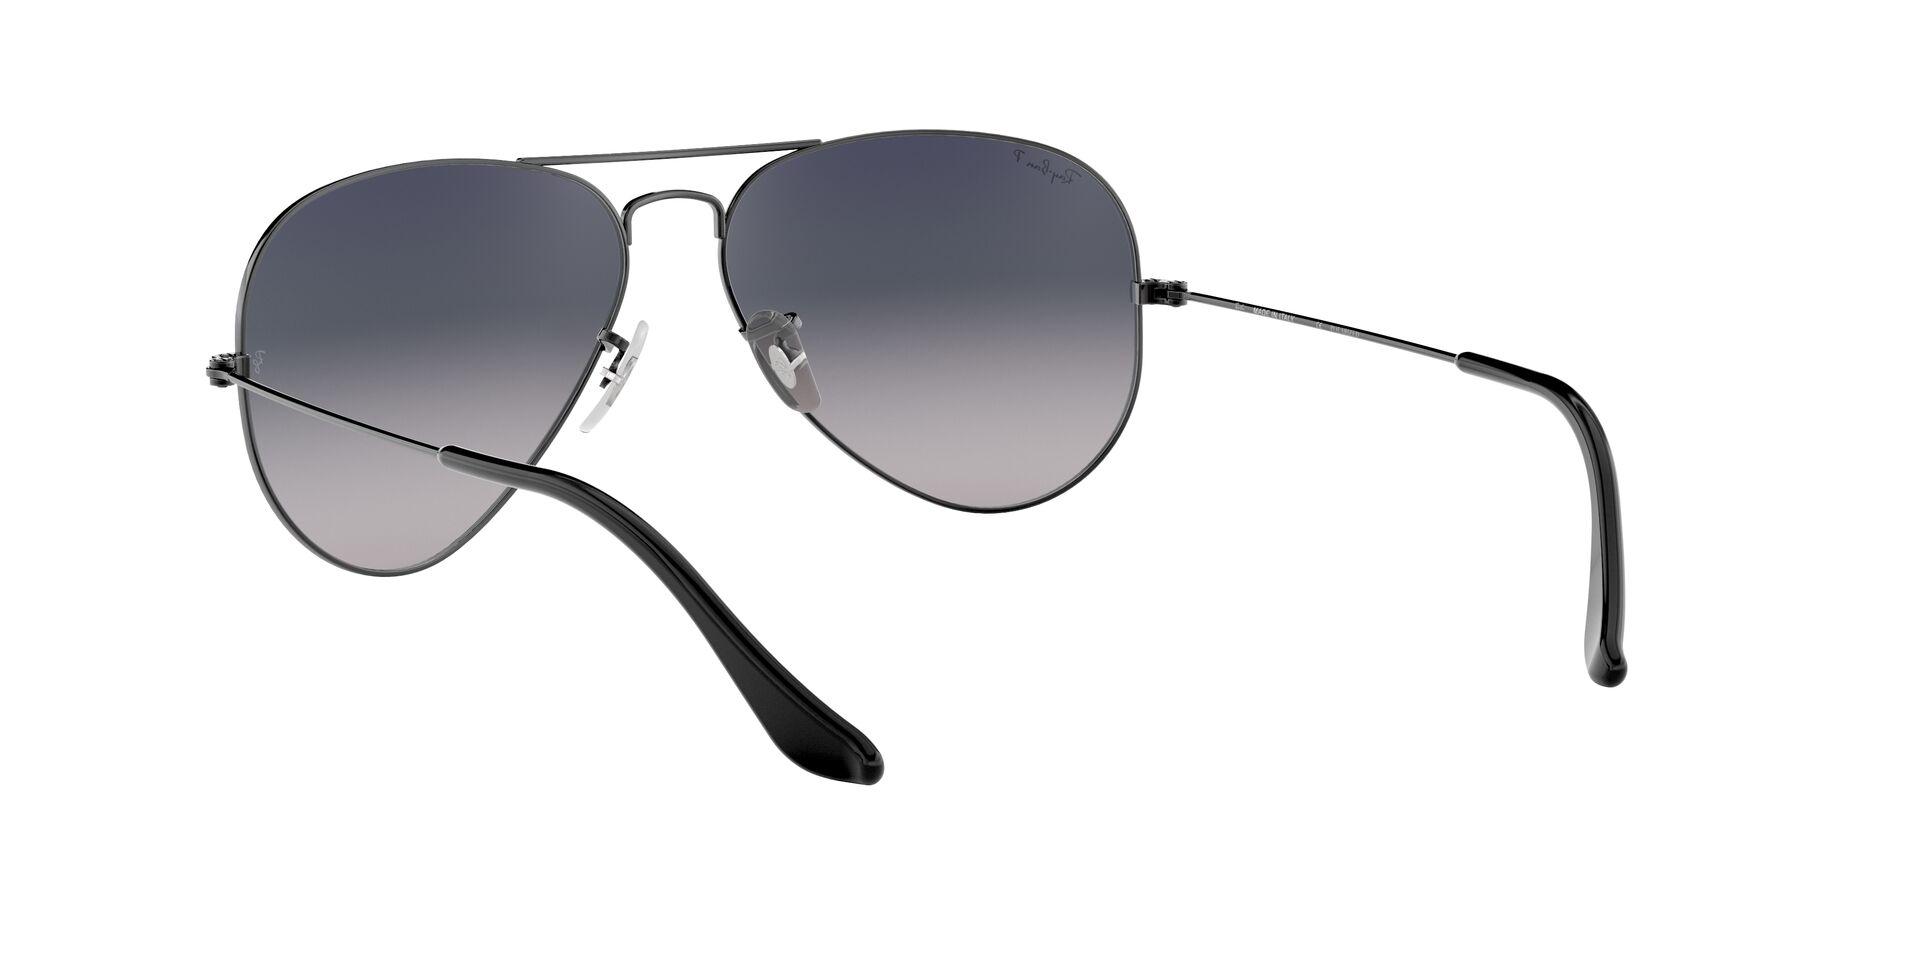 Mắt Kính Ray-Ban Aviator Large Metal - RB3025 004/78 -Sunglasses